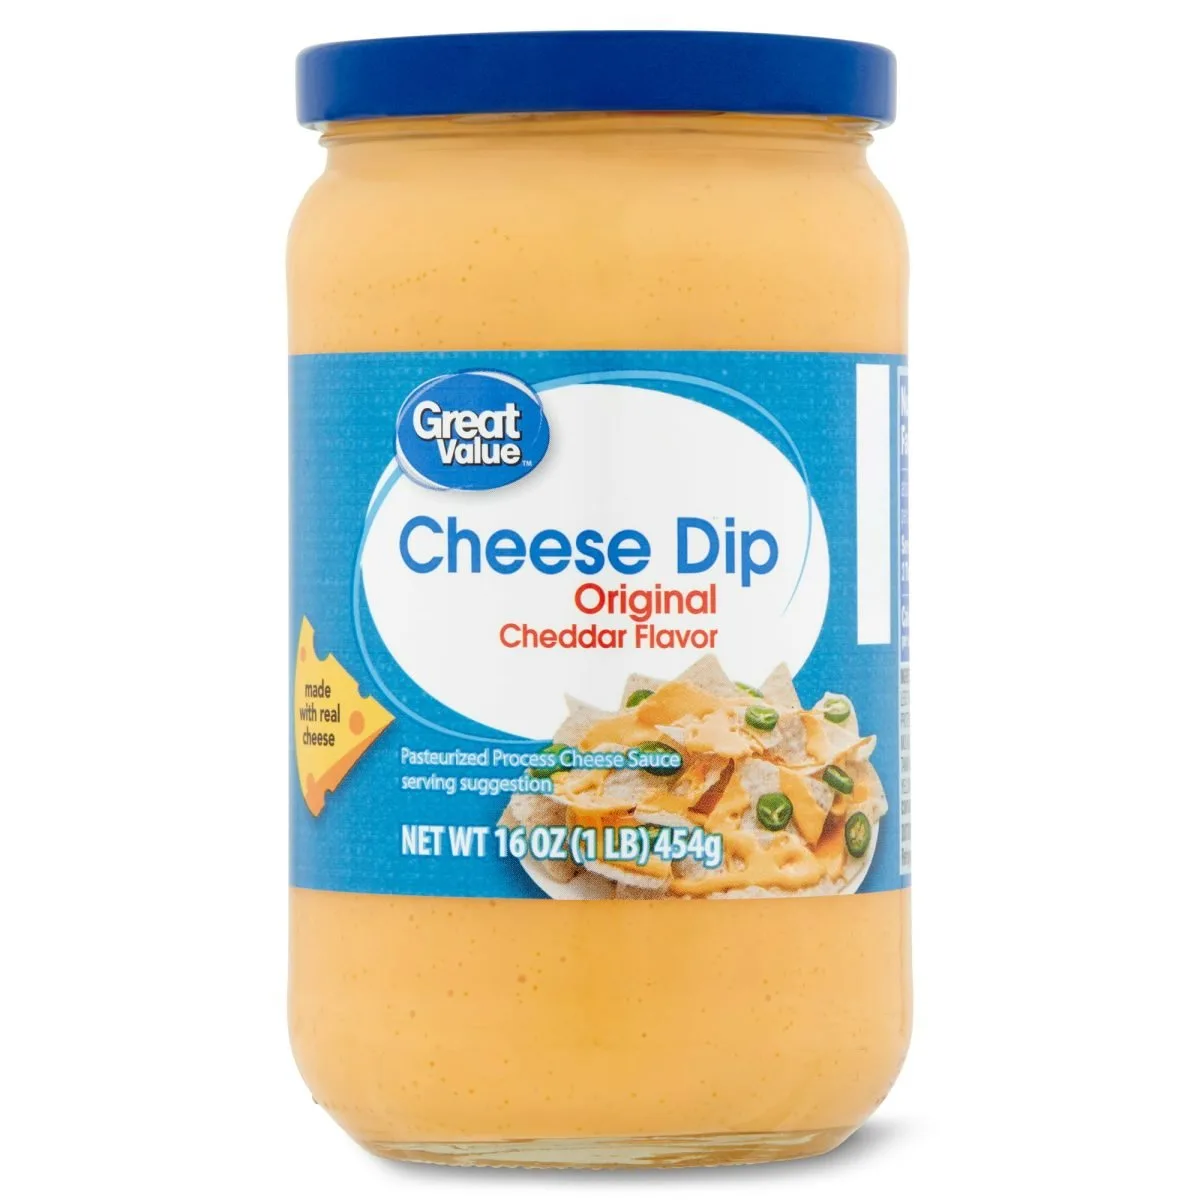 Great Value Original Cheddar Flavor Cheese Dip